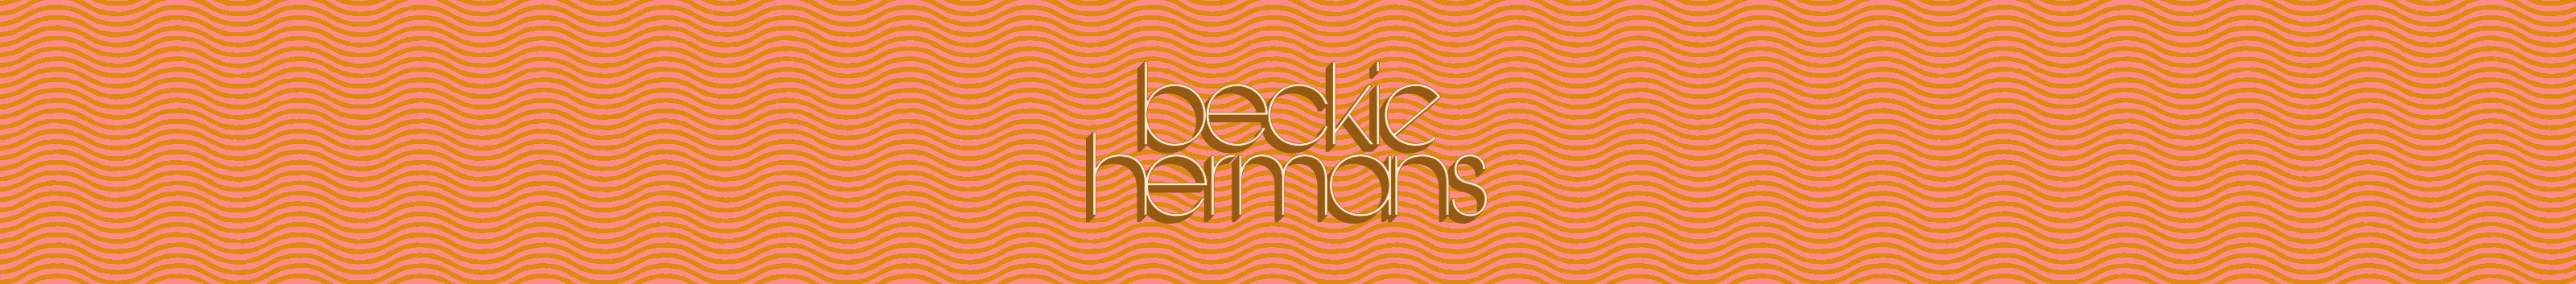 Beckie Hermans's profile banner